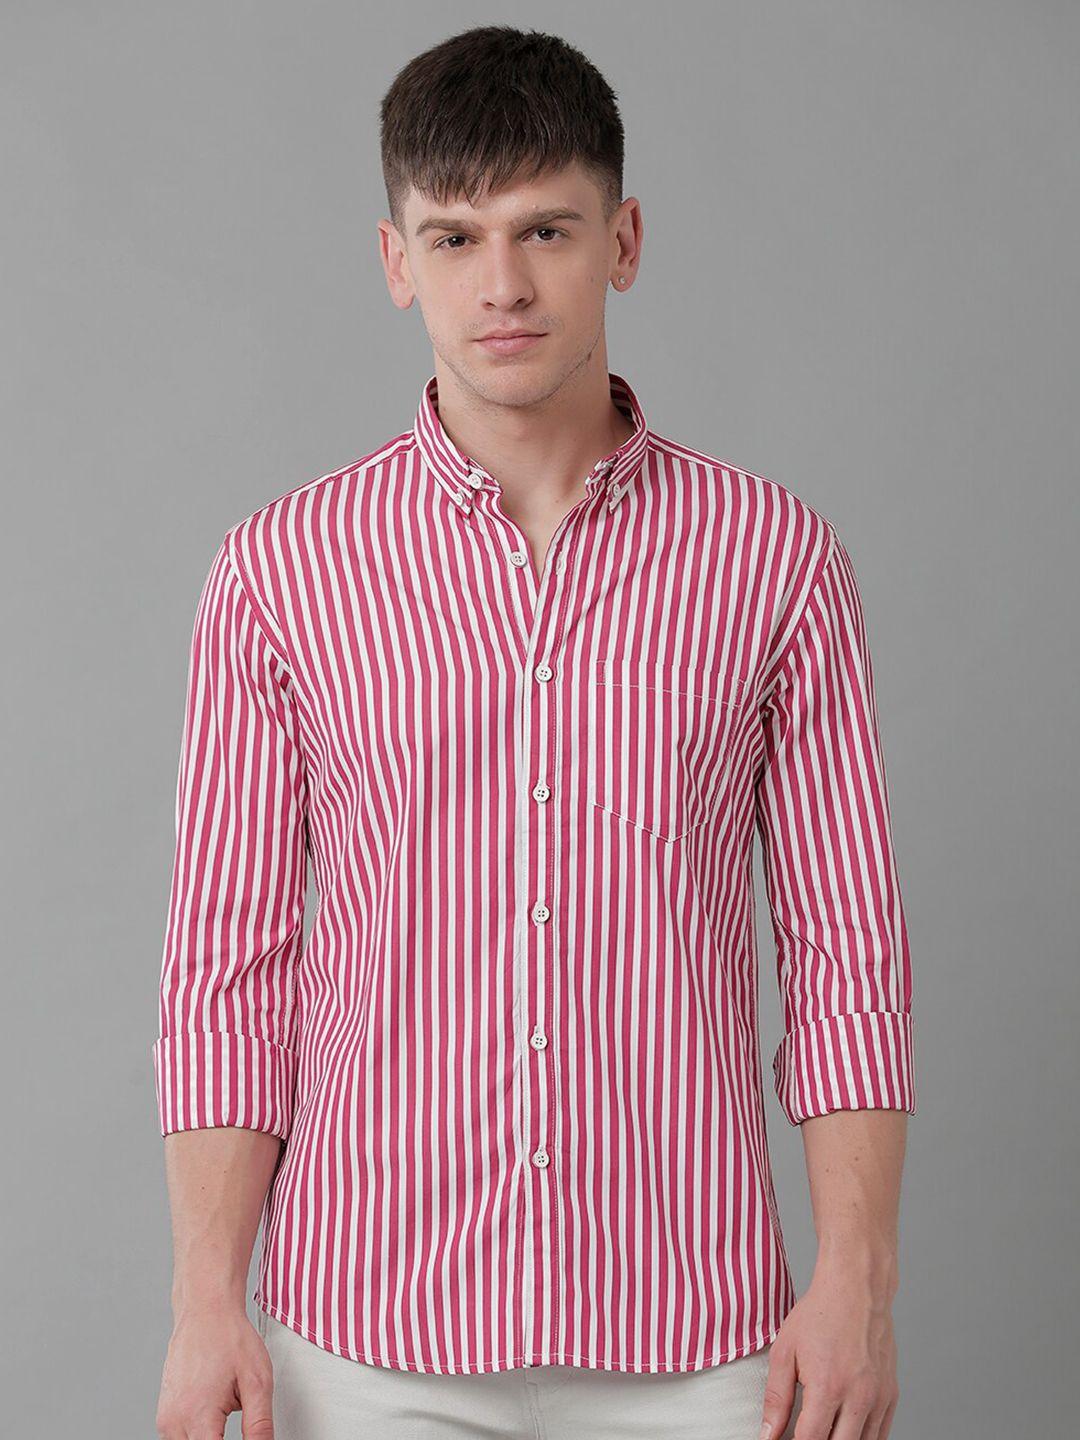 yovish premium vertical striped striped cotton casual shirt